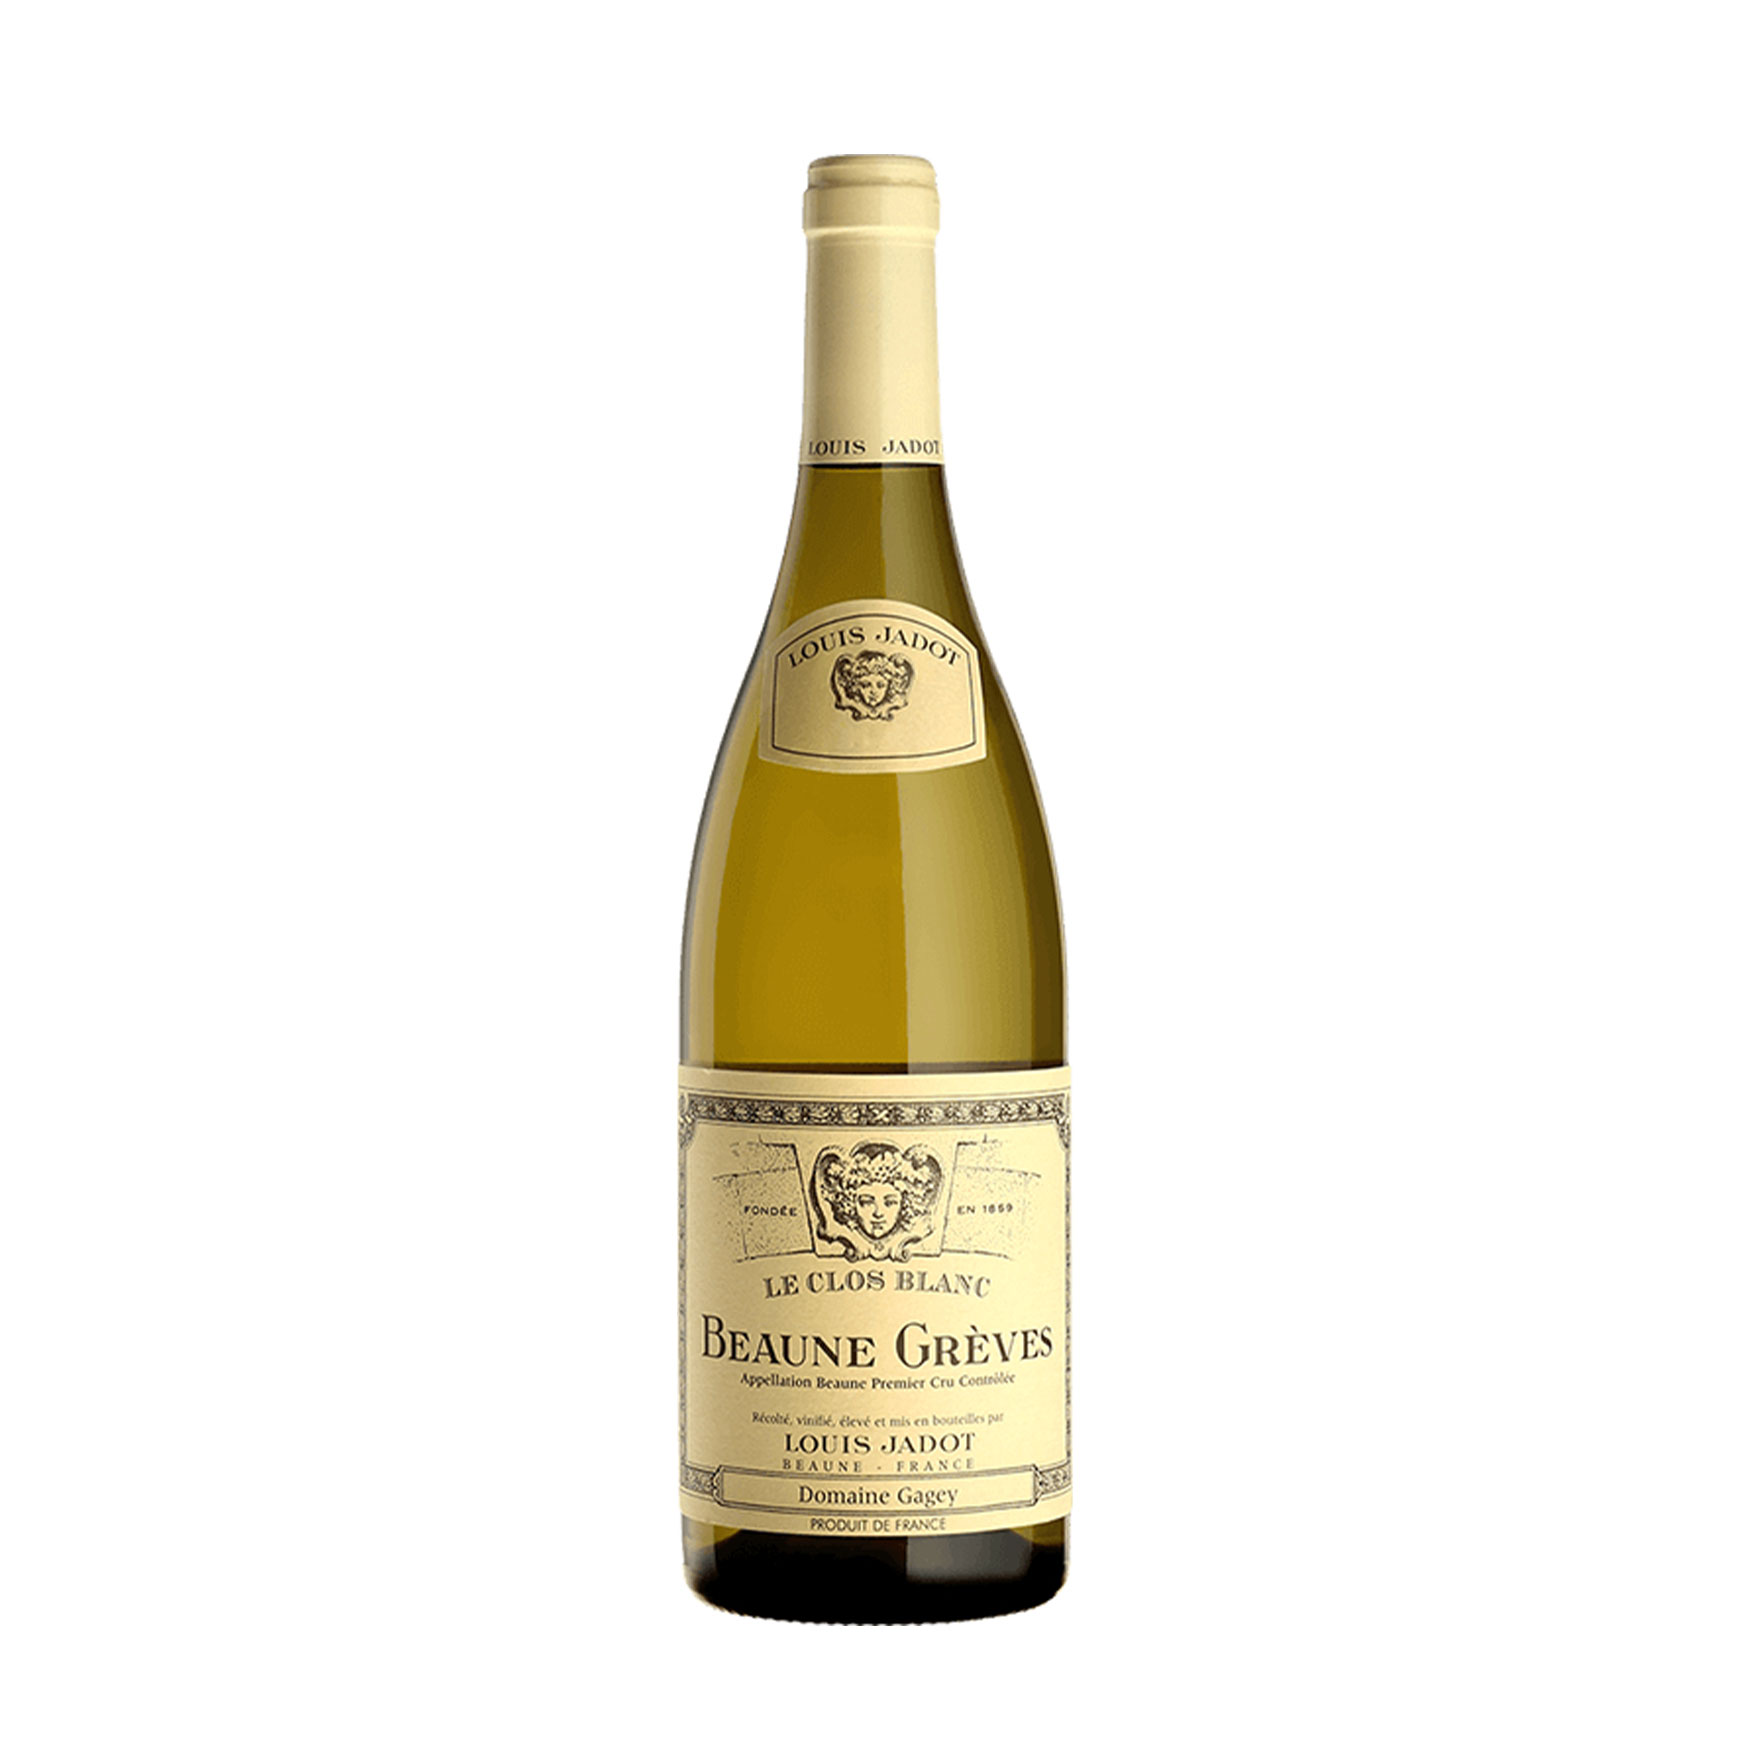 La scolca вино цена. Белое вино Bourgogne Louis Jadot. Bourgogne Chardonnay Louis Jadot. Louis Jadot petit Chablis. Chablis Premier Cru 2018 Laroche.